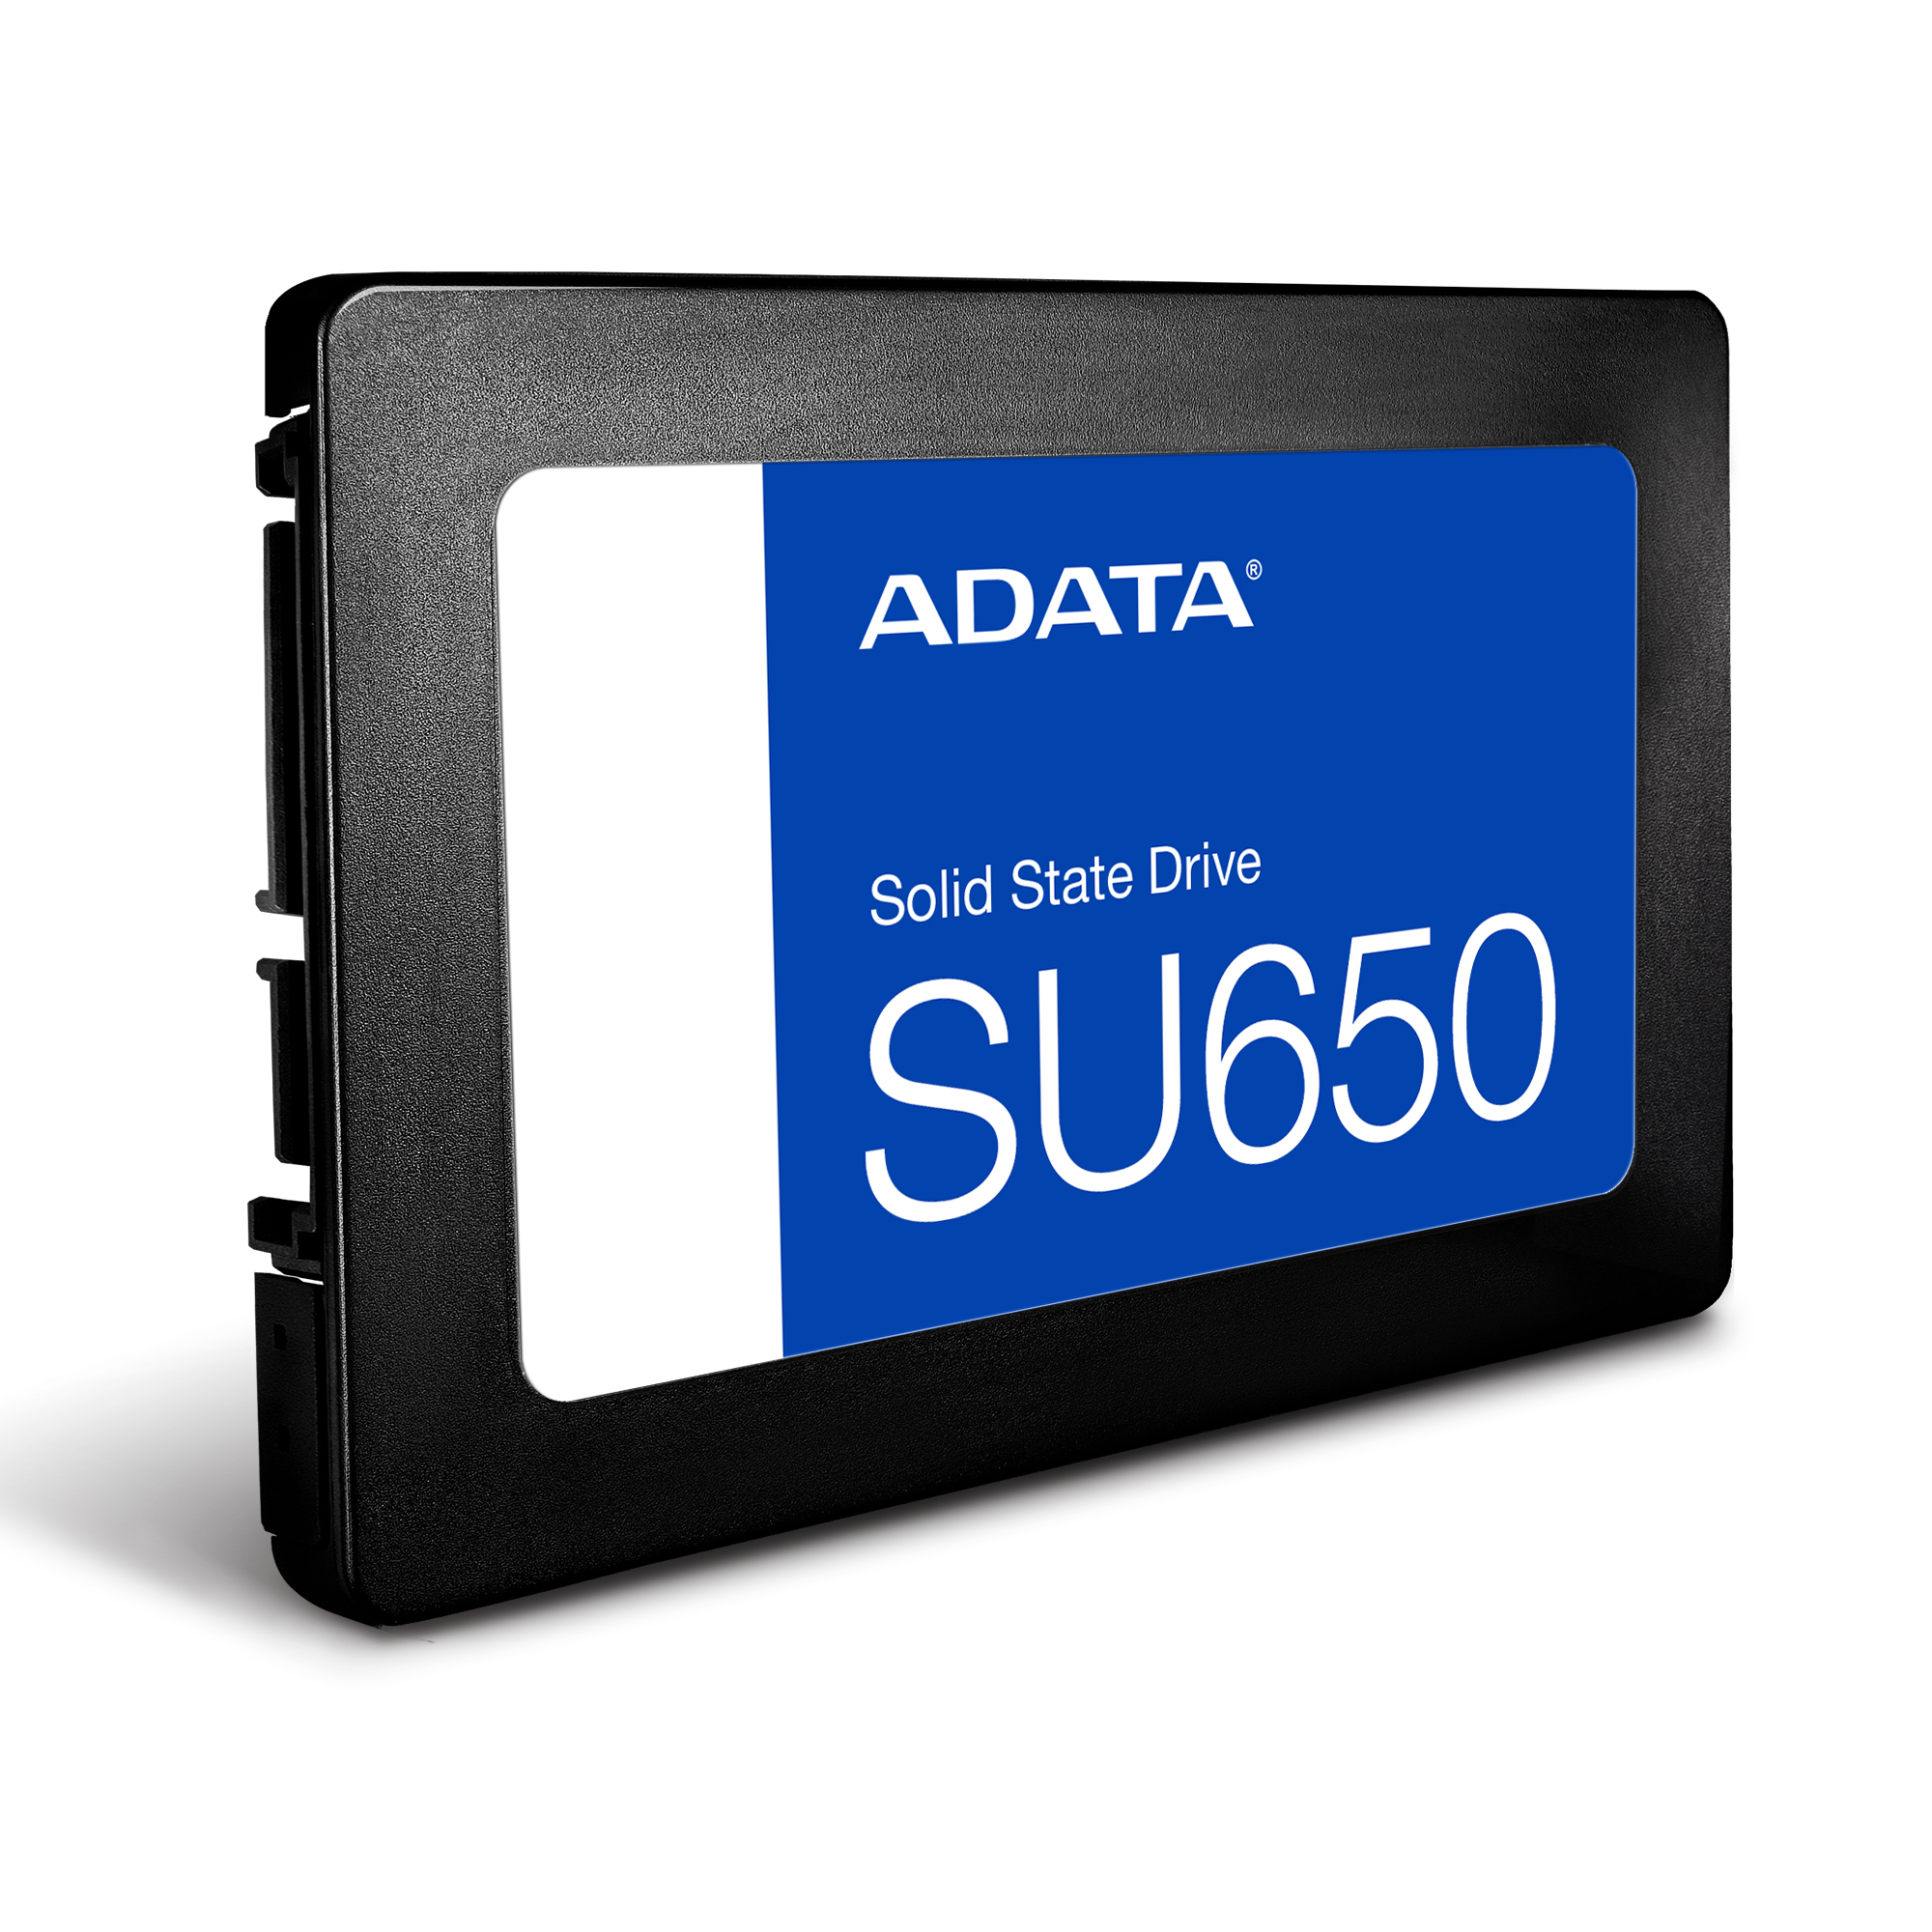 【SSD 240GB 2枚セット】 ADATA Ultimate SU650スマホ/家電/カメラ